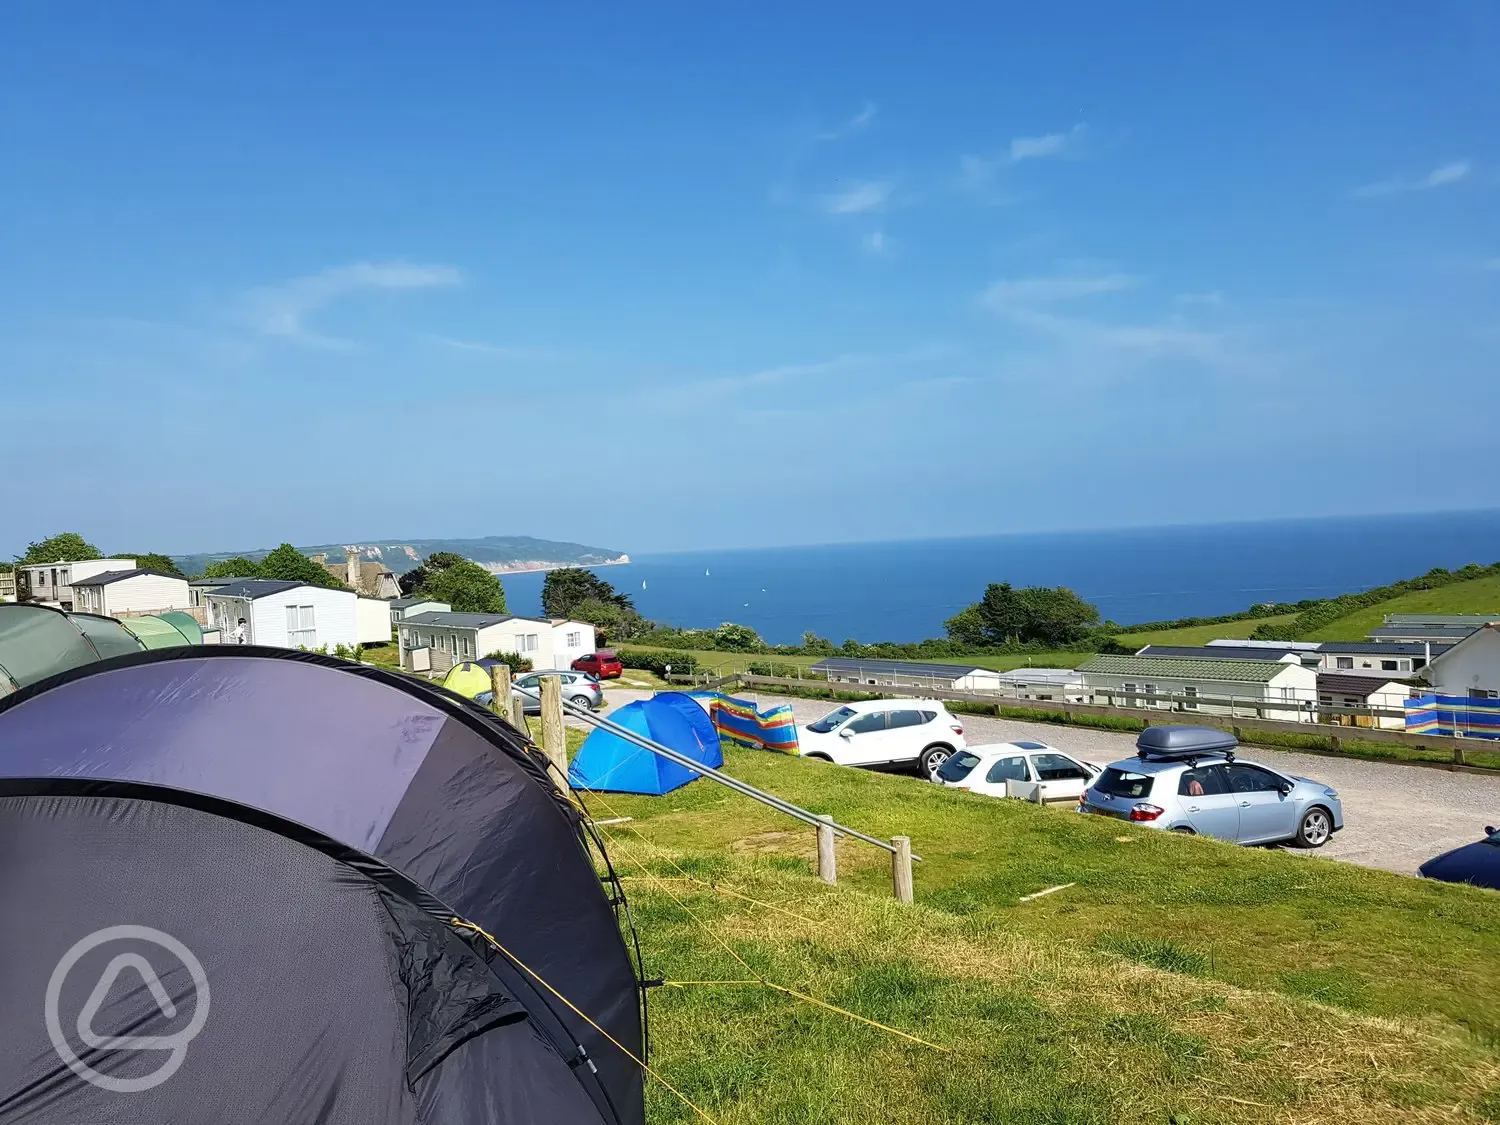 Tent camping at Beer Head Caravan Park